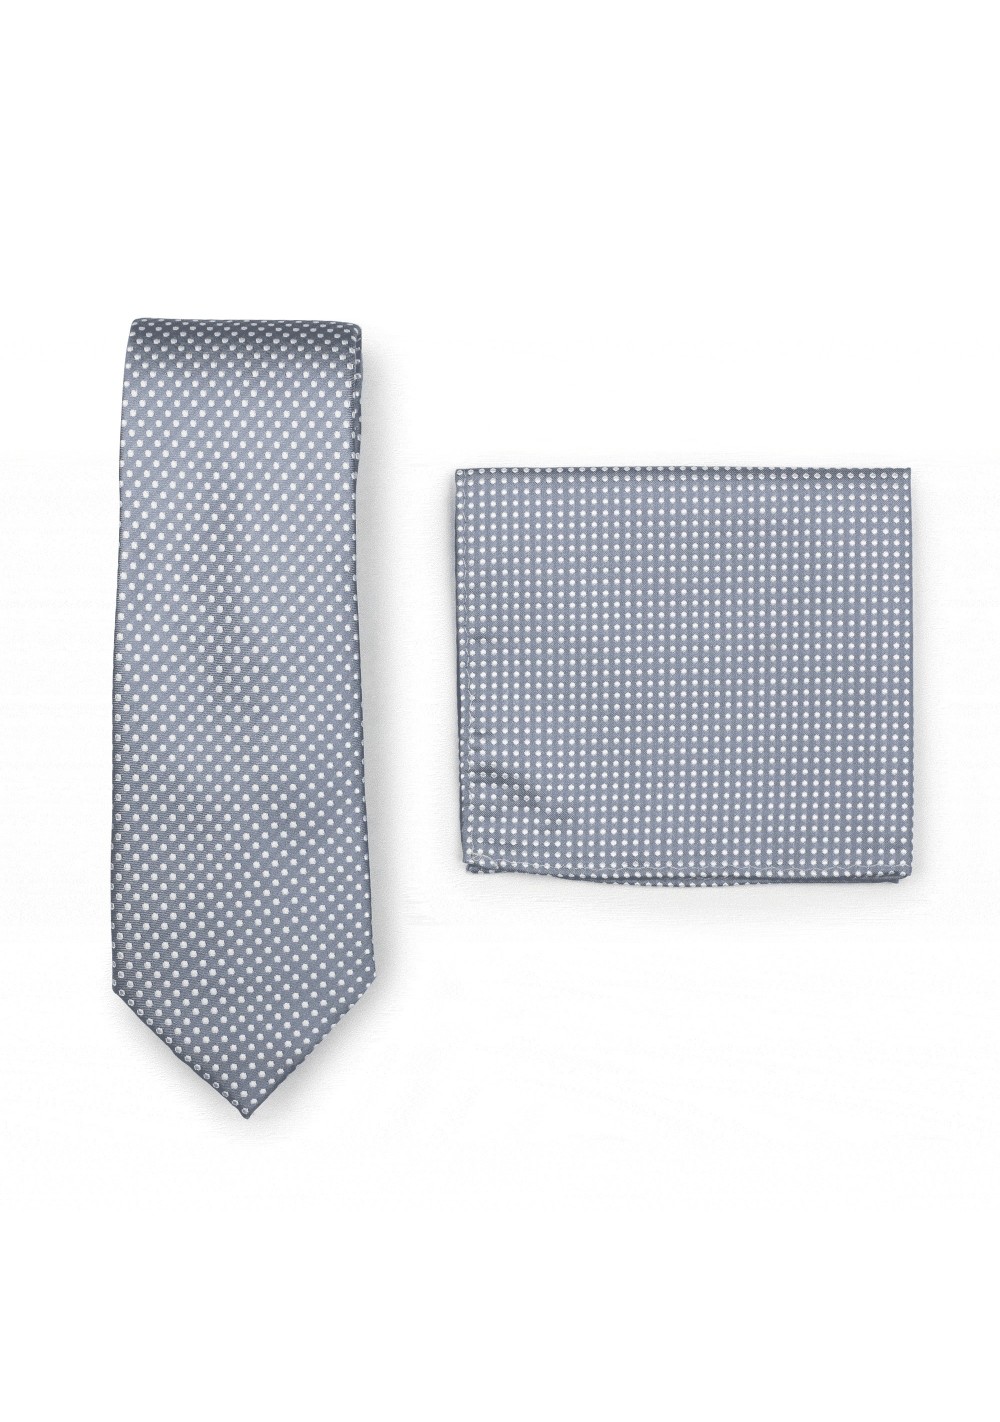 Shadow Gray Pin Dot Tie and Hanky Set